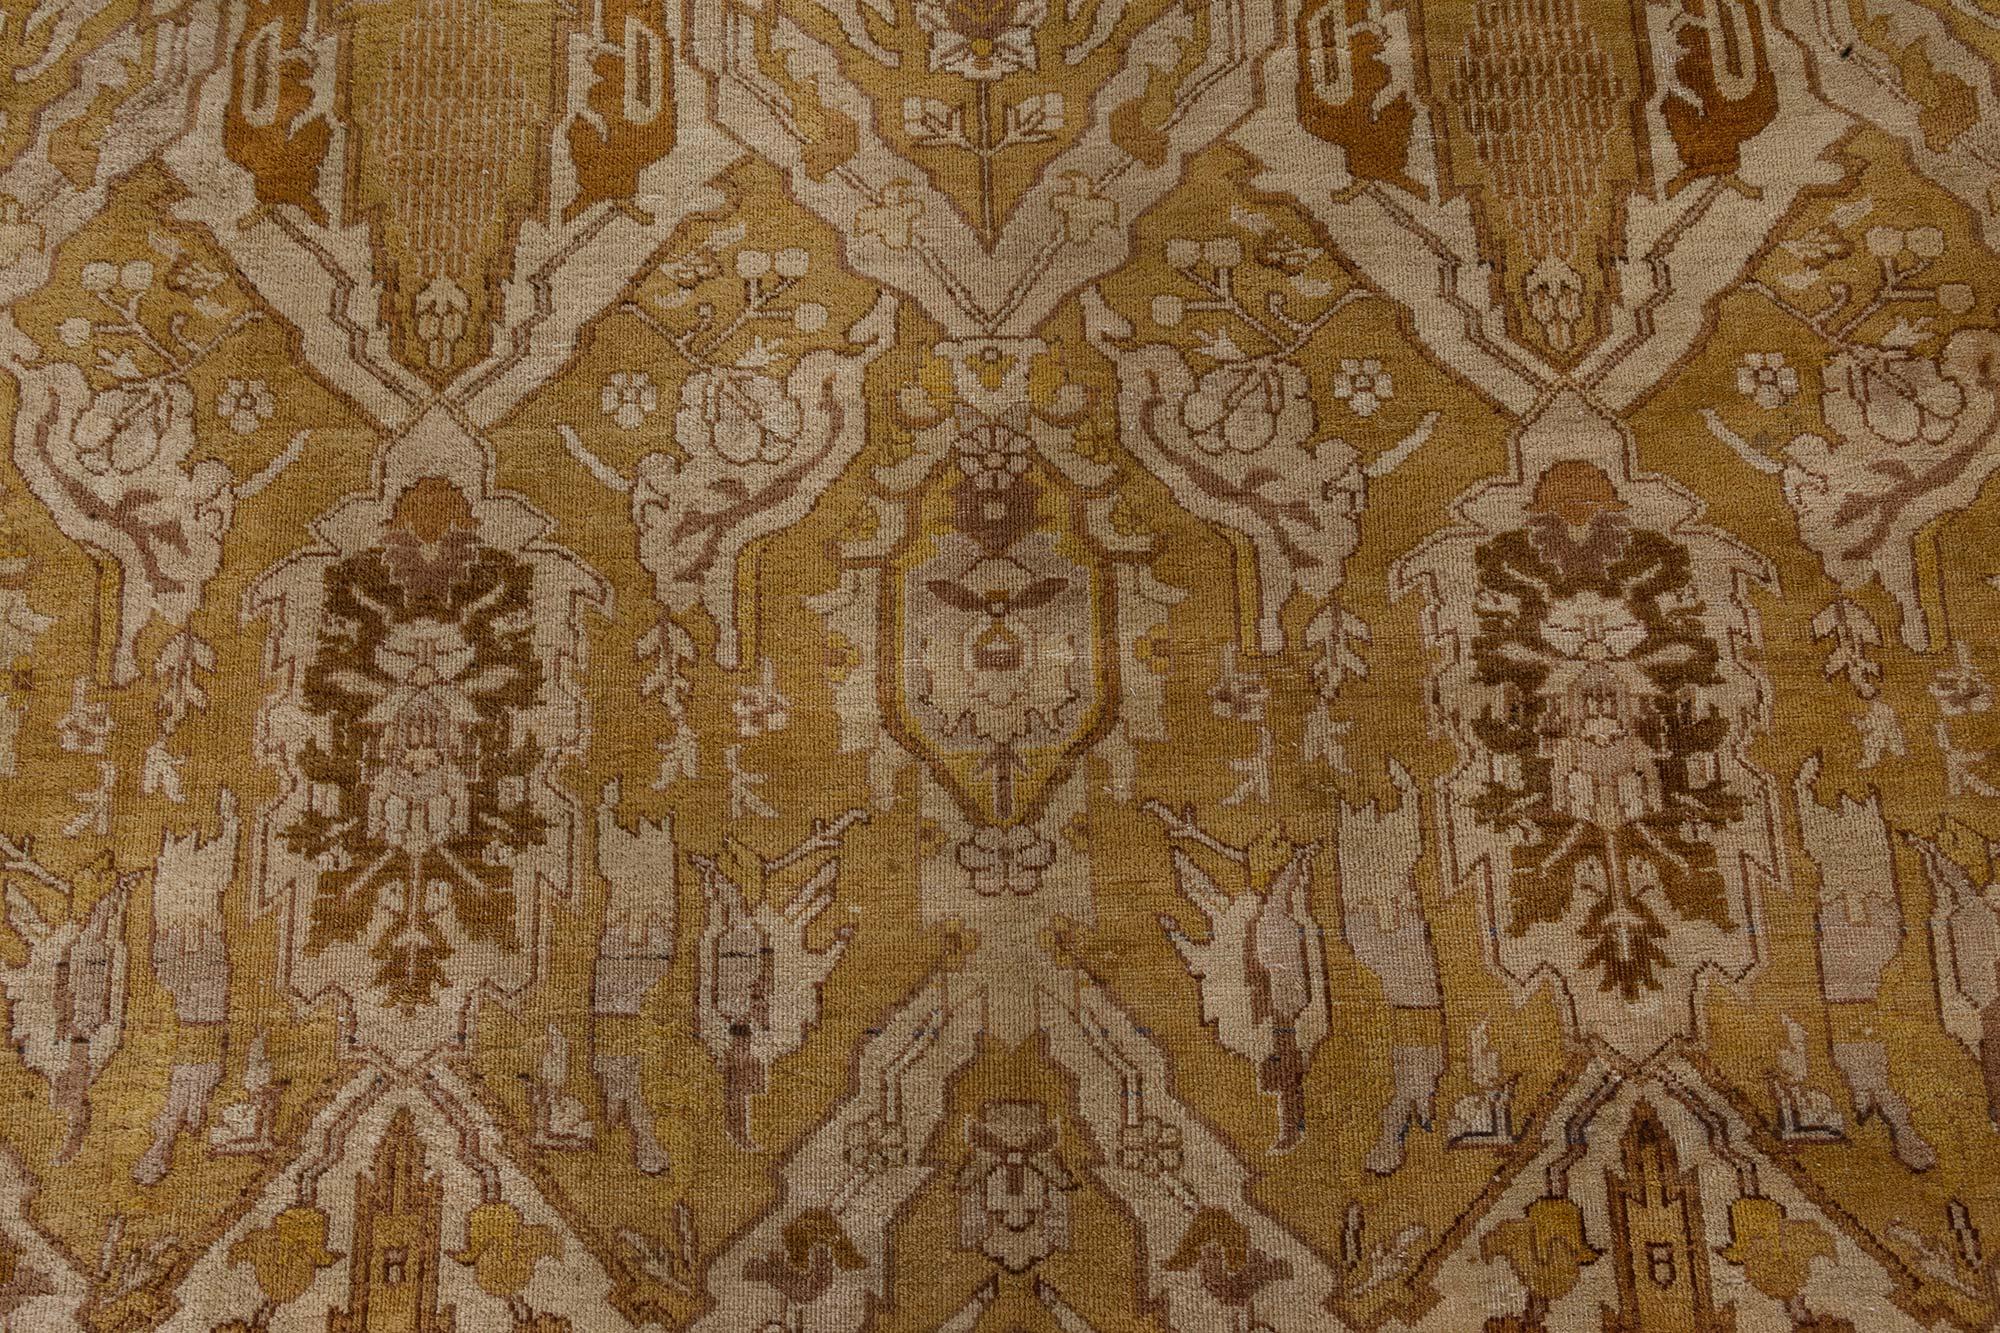 Antique Indian Amritsar beige, brown, gold handmade wool rug (size adjusted)
Size: 9'8